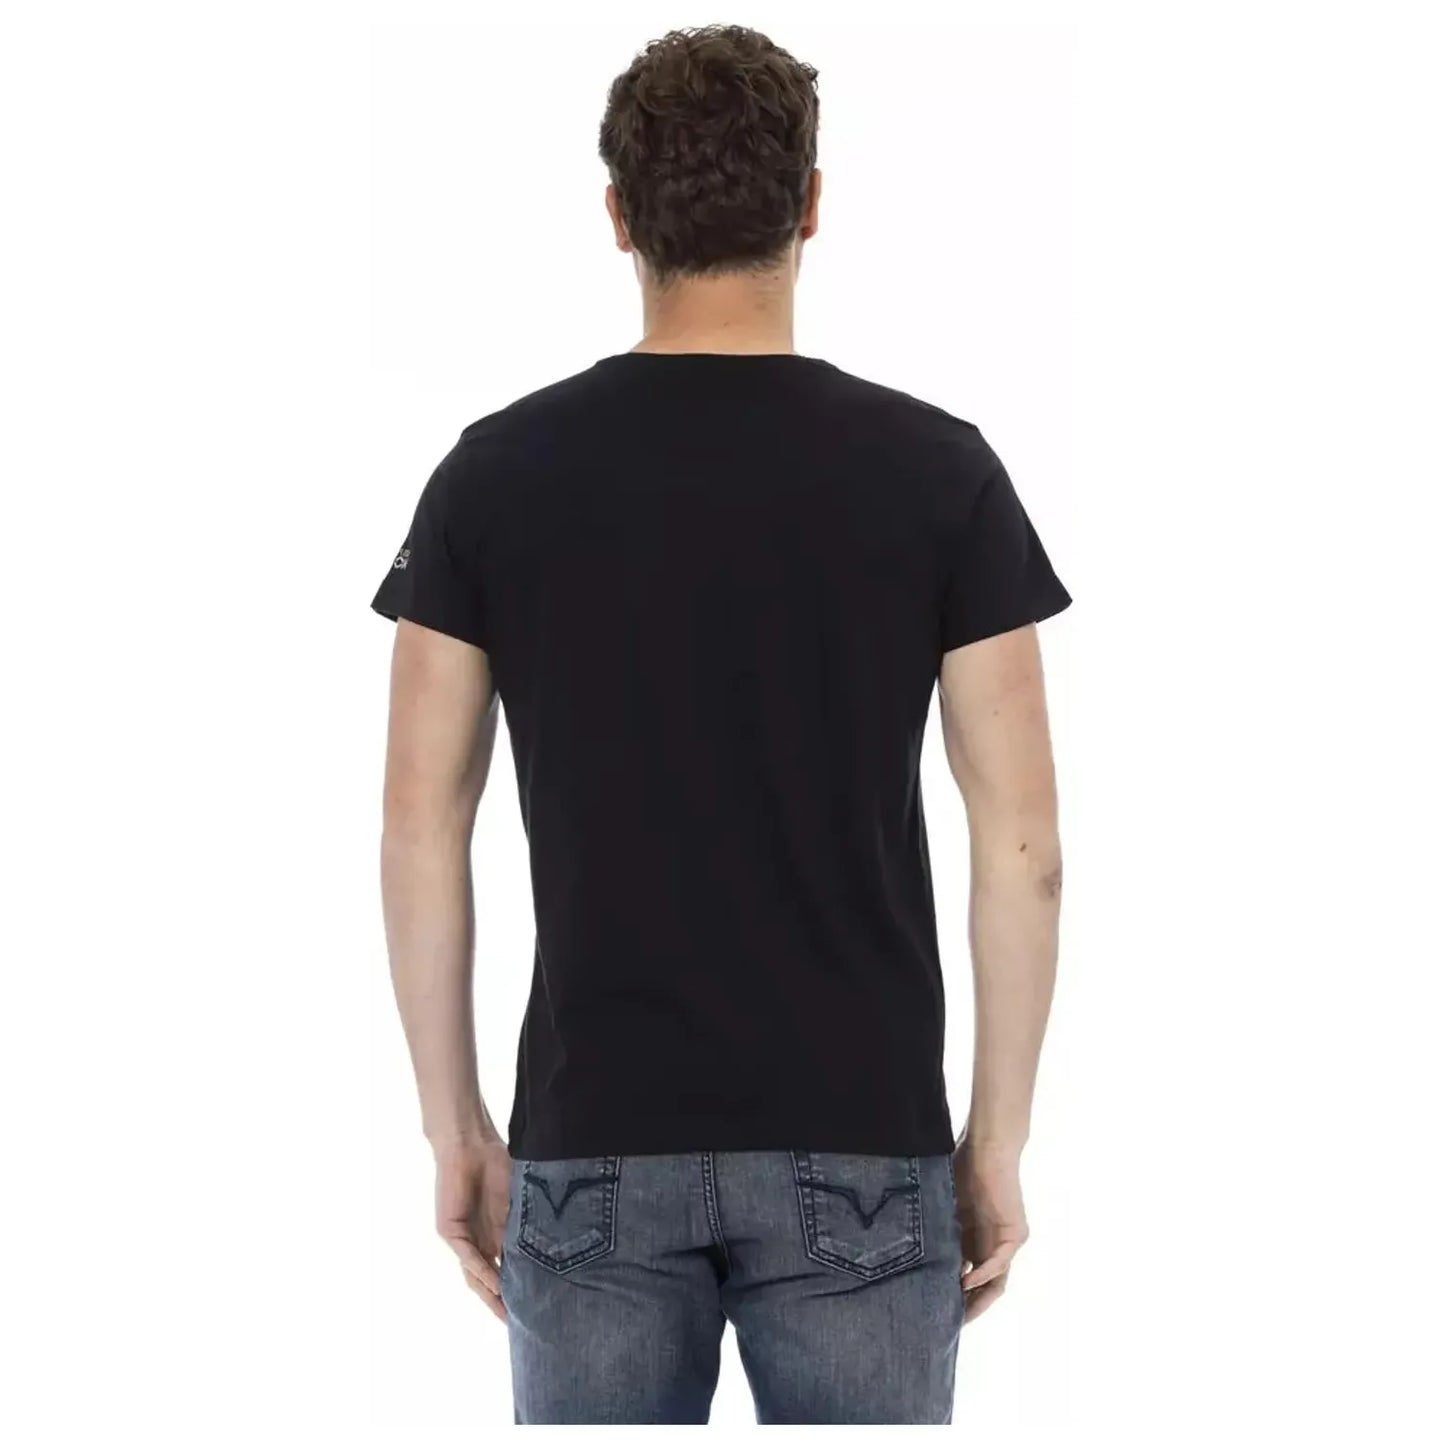 Trussardi Action Sleek Black Tee with Exclusive Front Print black-cotton-t-shirt-67